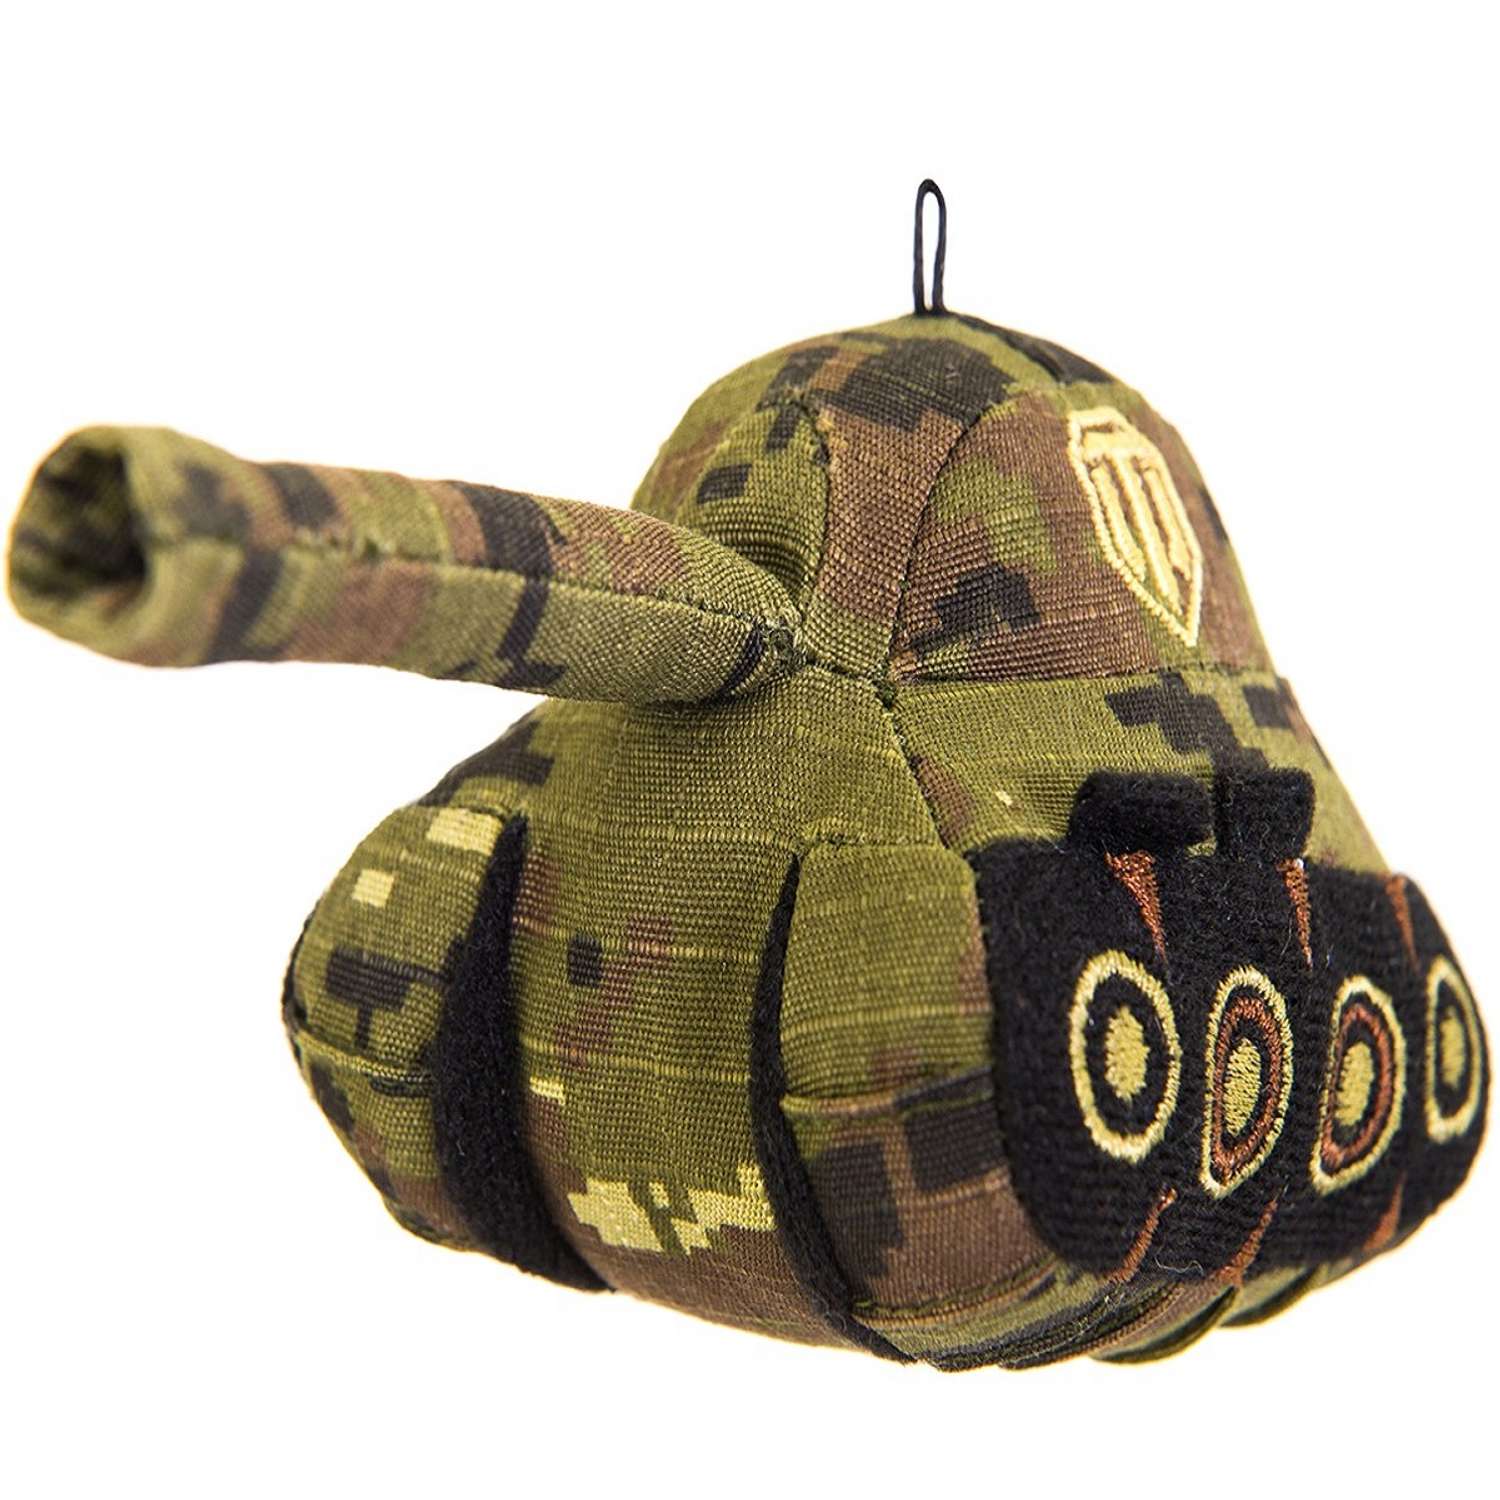 Мягкая игрушка World of Tanks в виде танка зеленый хаки - фото 2